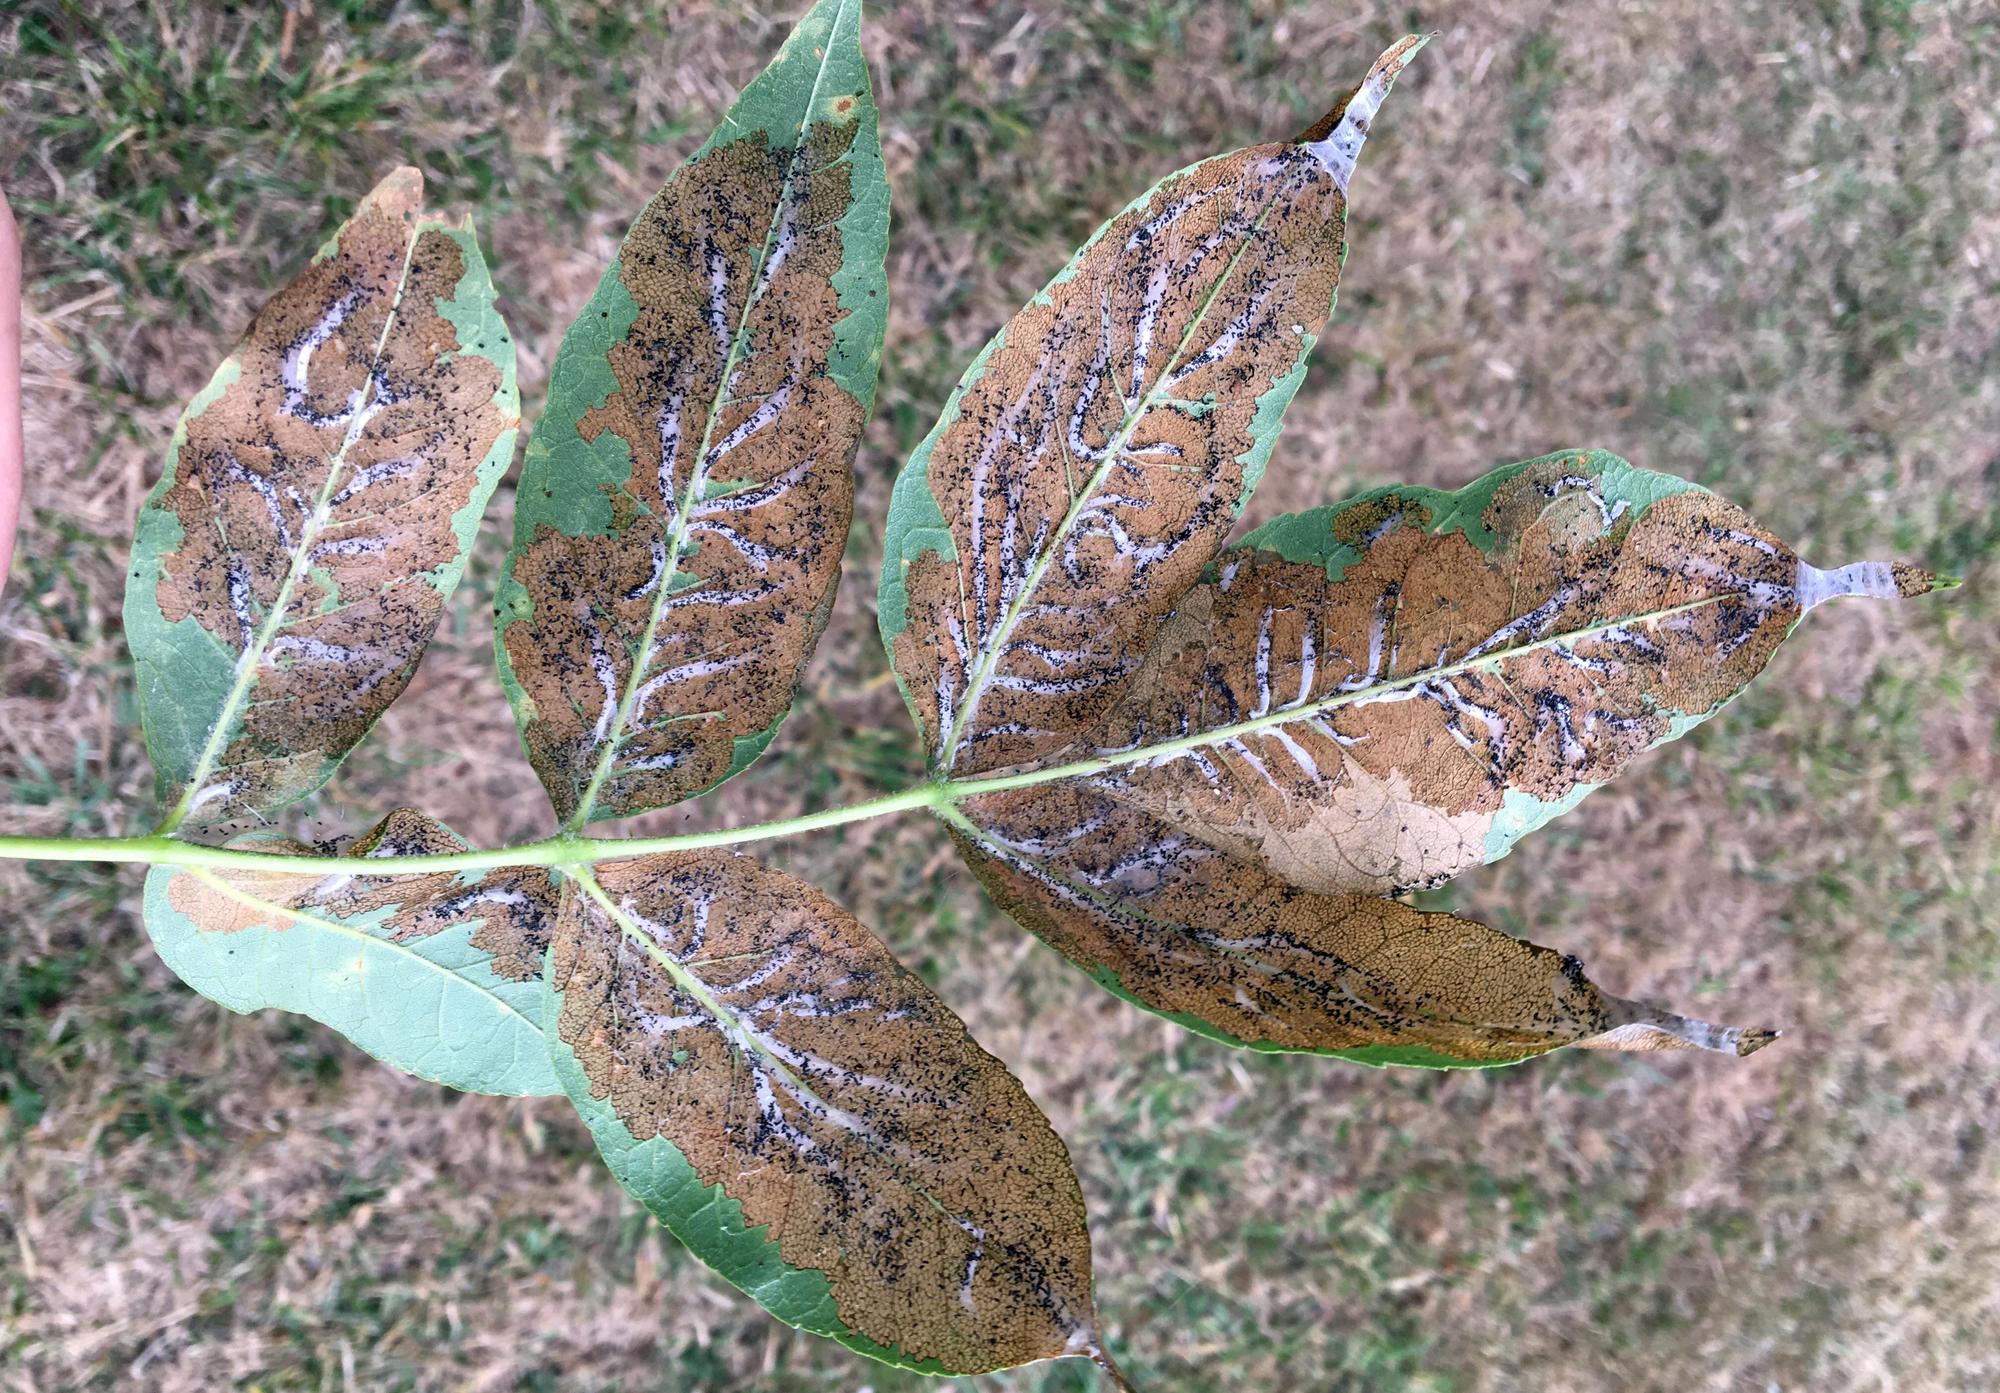 badly scarred leaf